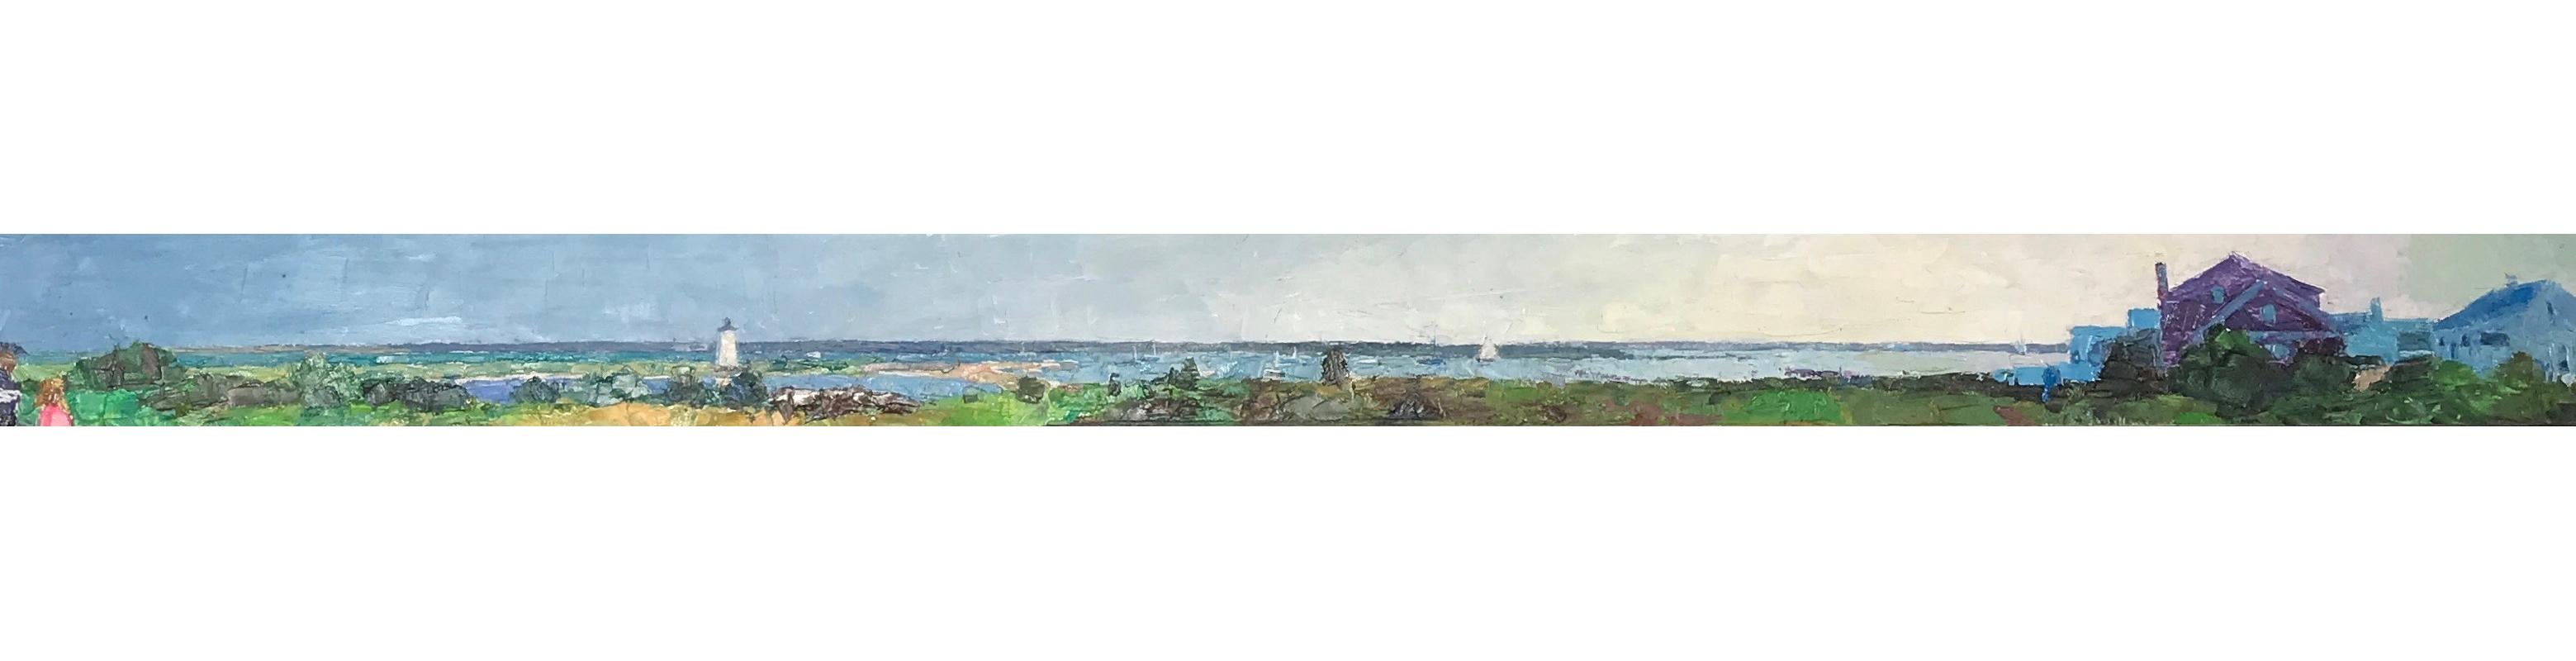 Larry Horowitz Landscape Painting - "Edgartown Panorama" oil painting of local harbor on Martha's Vineyard